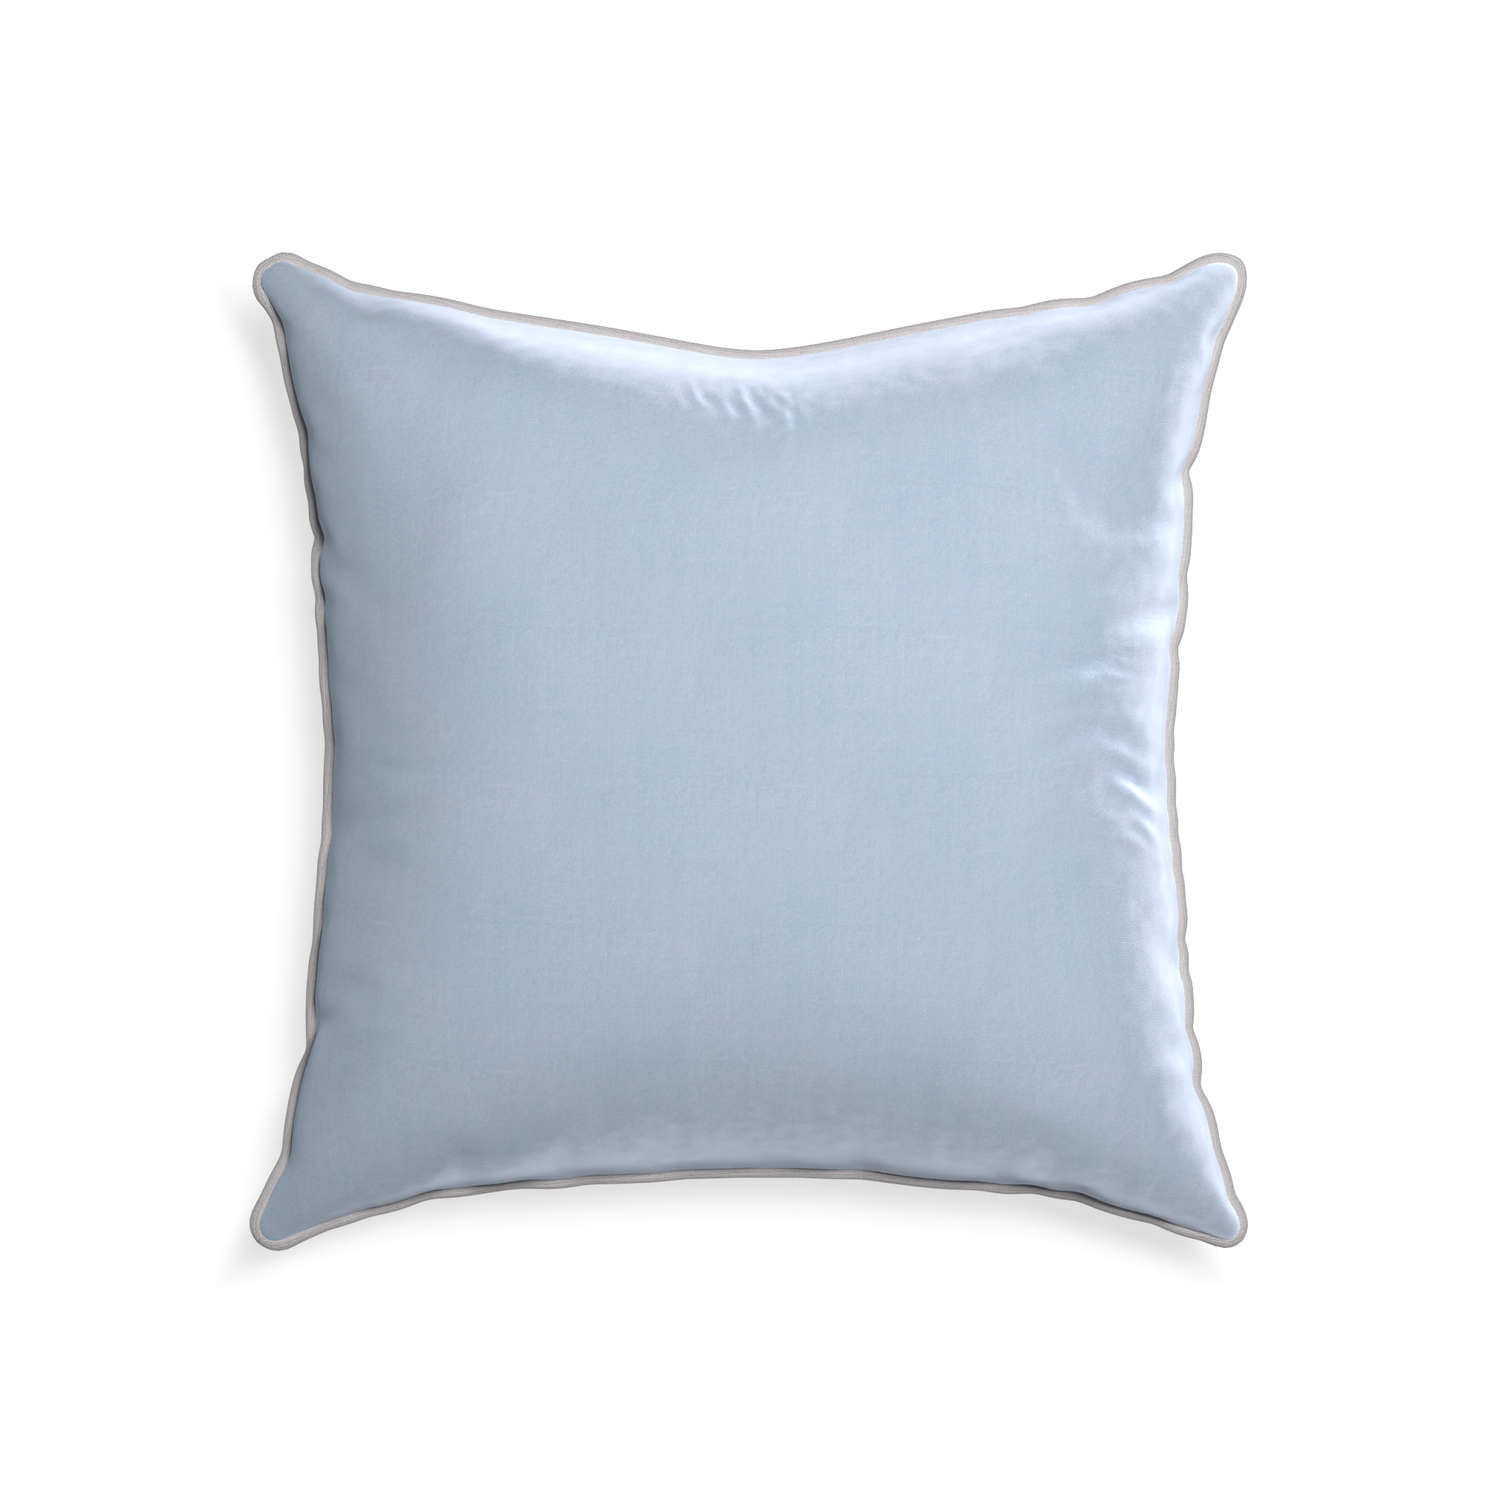 22-square sky velvet custom pillow with pebble piping on white background